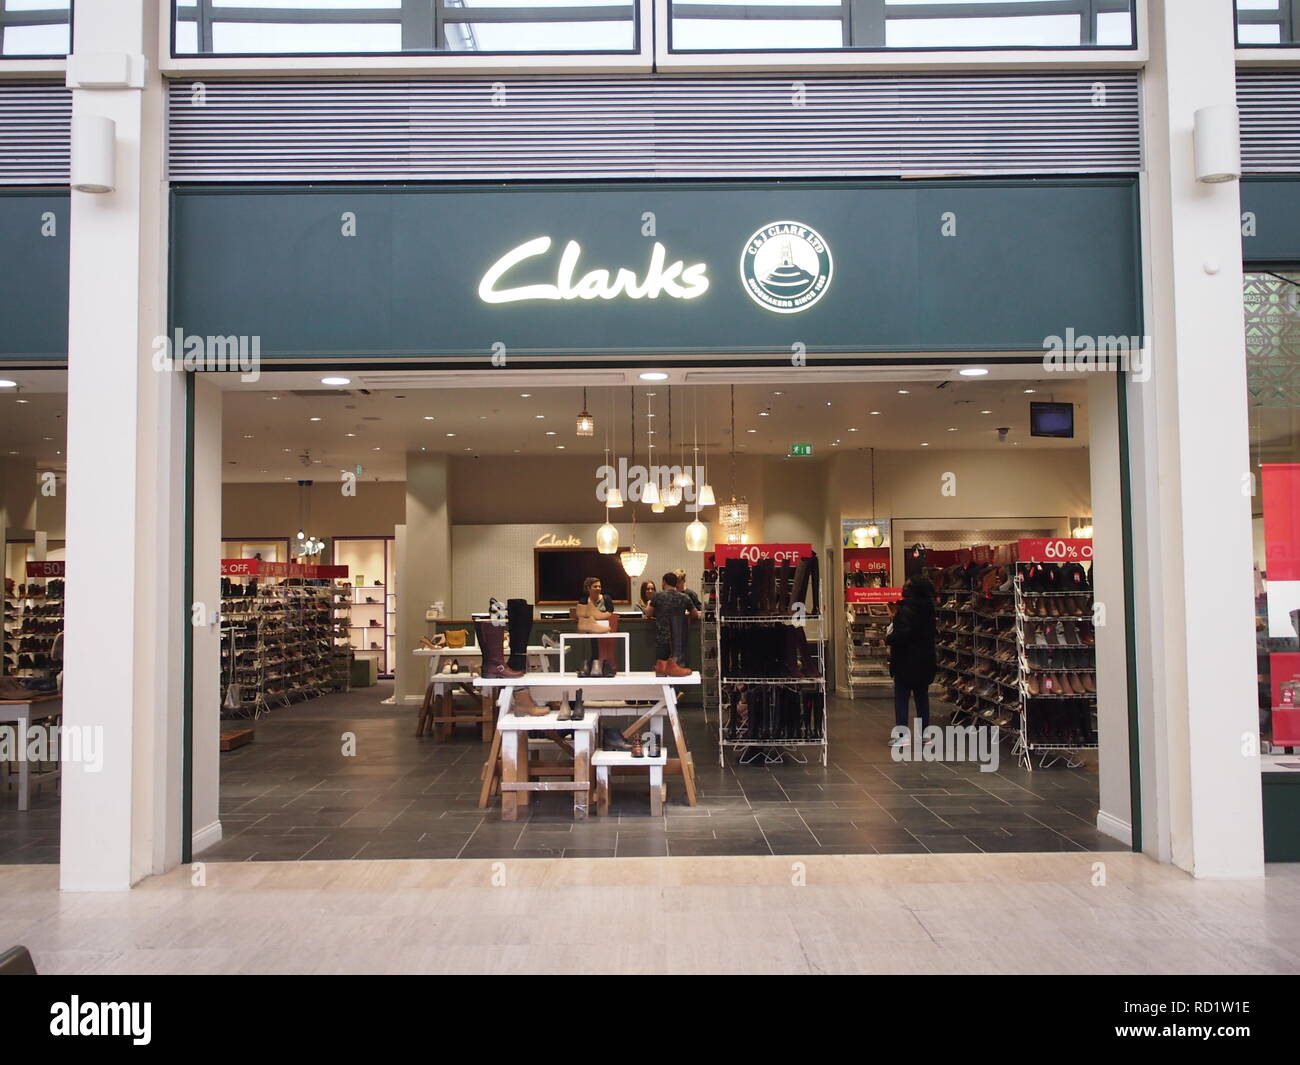 Clarks shoes shop in Milton Keynes shopping centre Stock Photo - Alamy